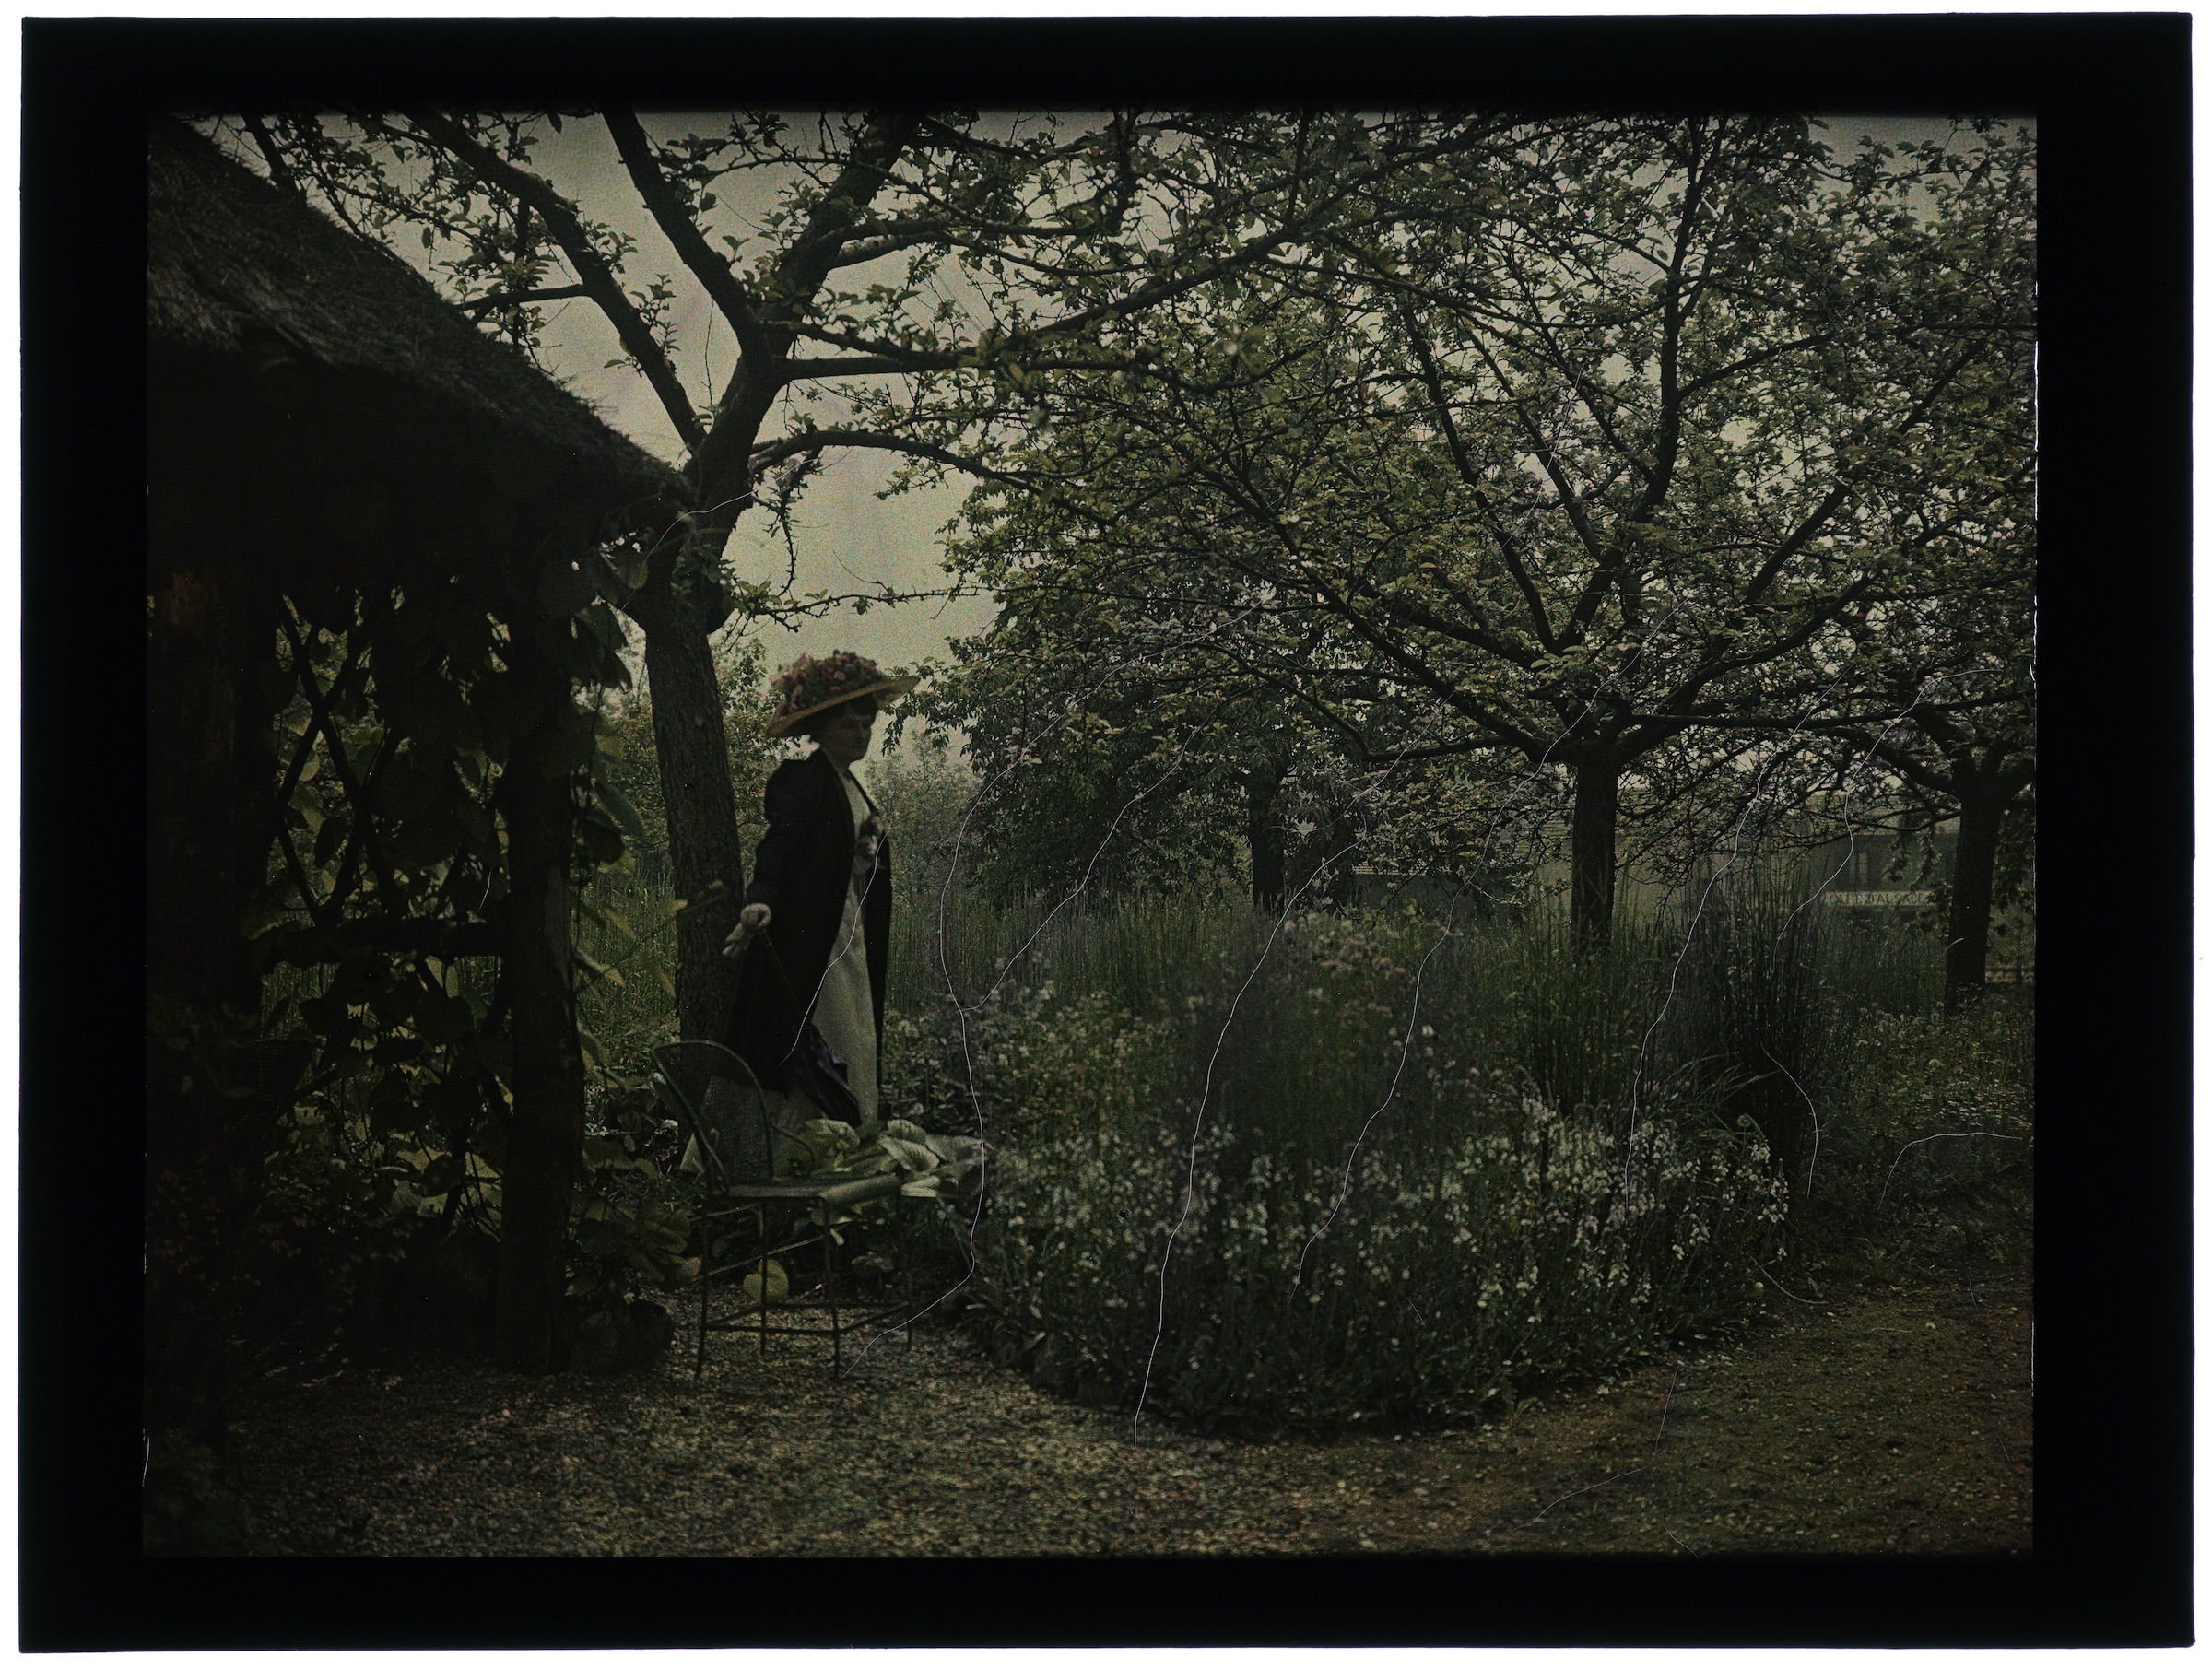 Femme dans le jardin fleuri